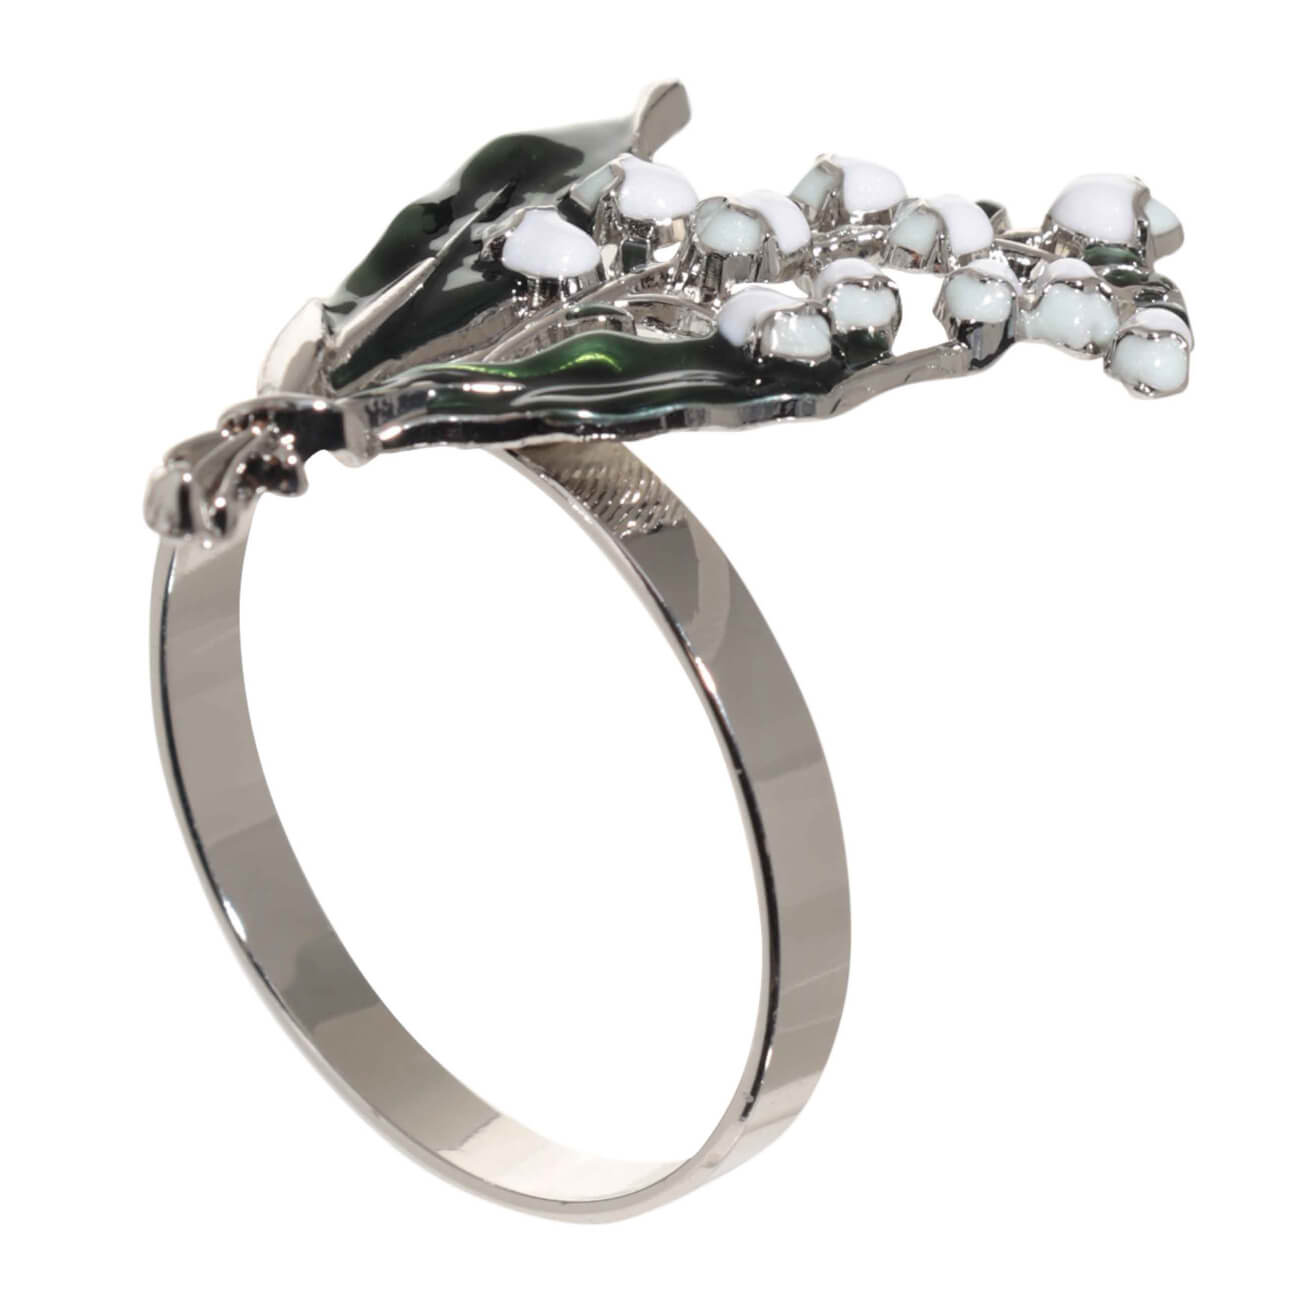 Кольцо для салфеток, 5 см, металл, зелено-серебристое, Ландыш с листьями, May-lily кольцо для платка